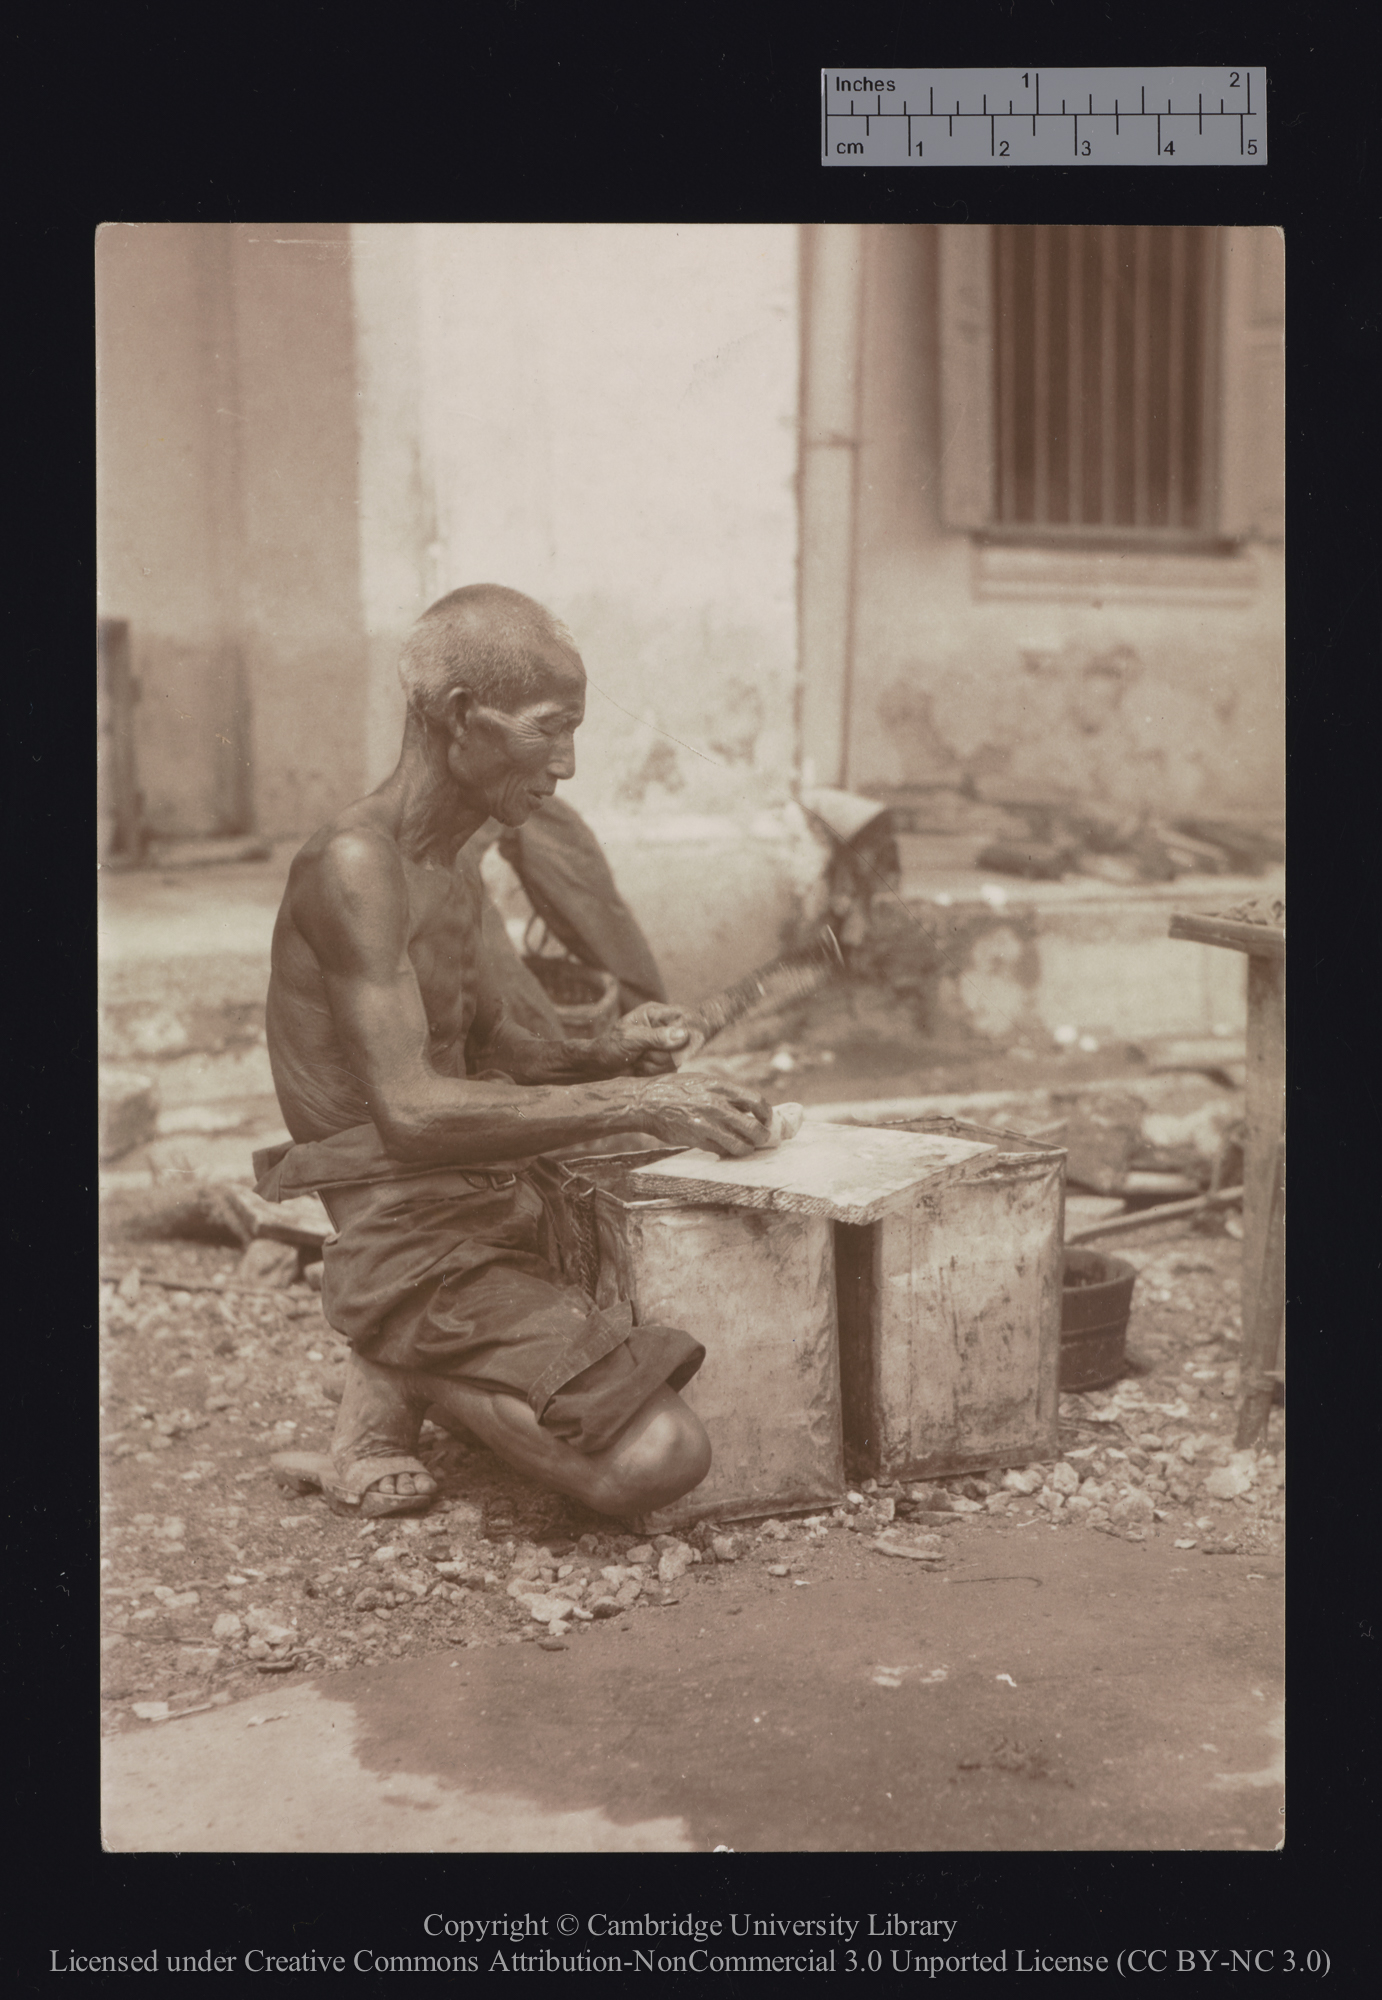 Preparing a meal, 1910 - 1929